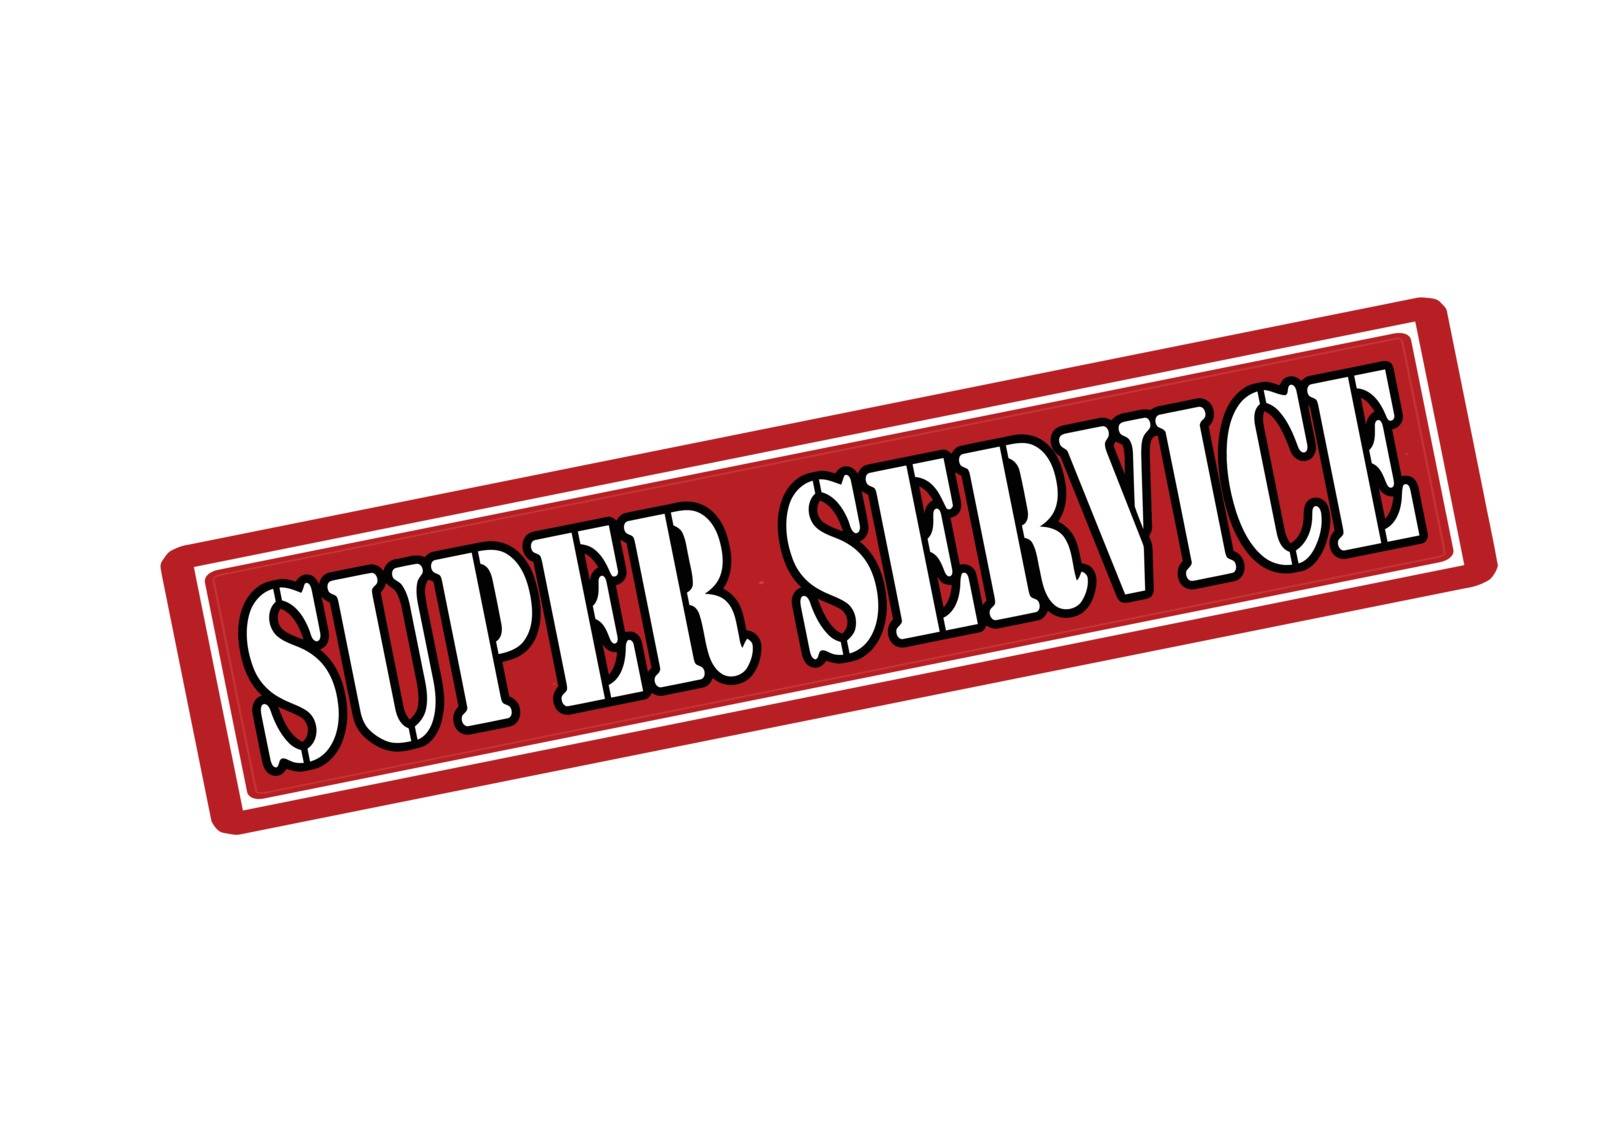 Super service by carmenbobo